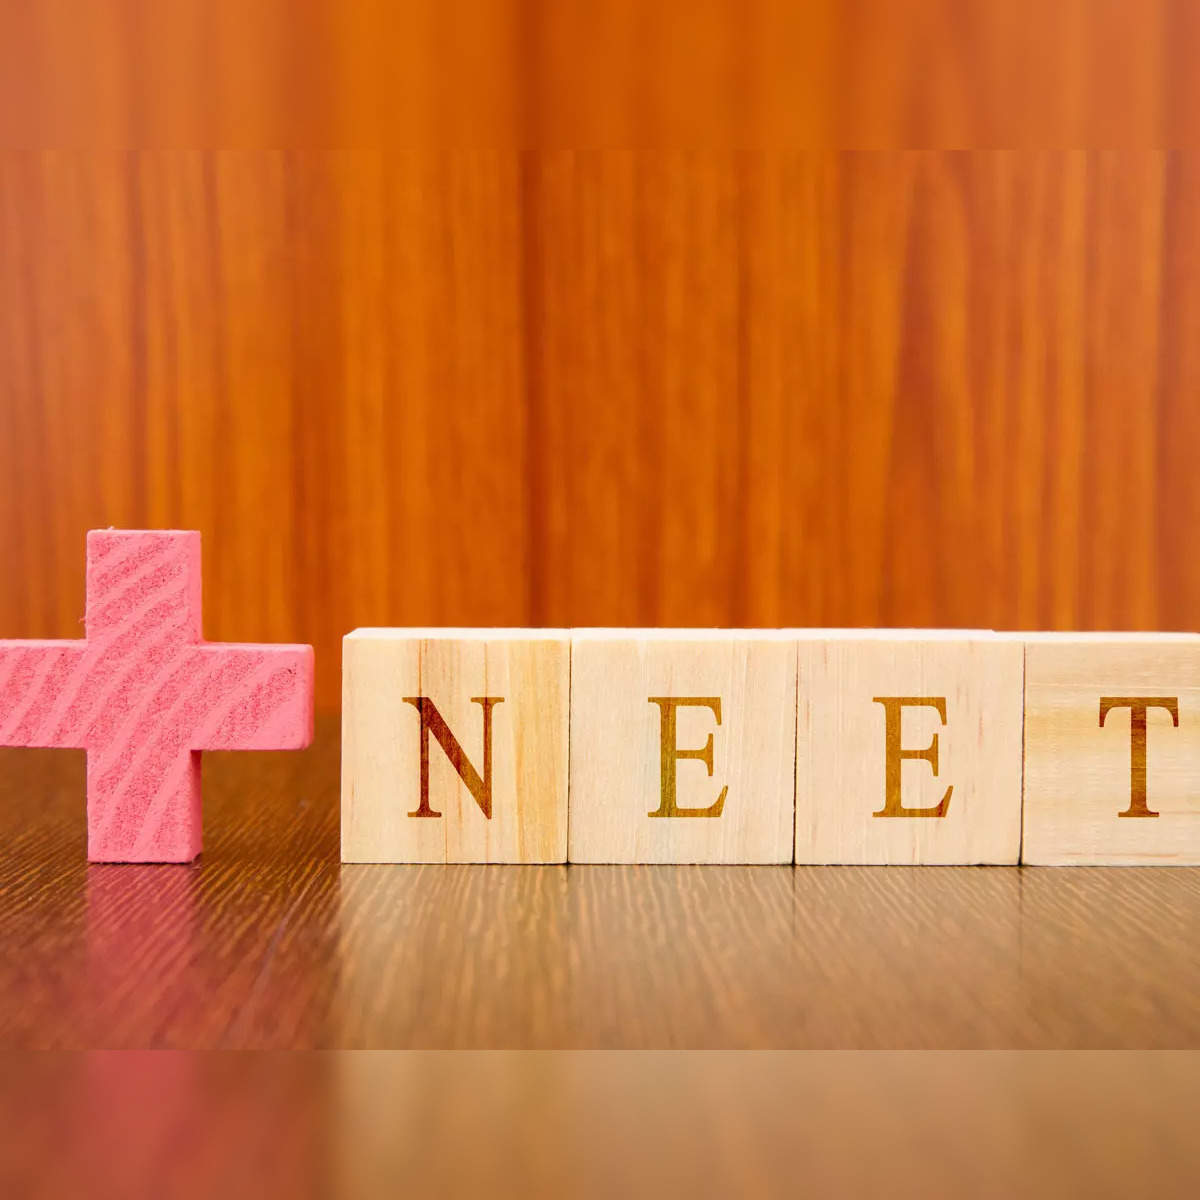 NEET UG 2022 exam on 17 July. Here's direct link to apply on neet.nta.nic.in  | Mint